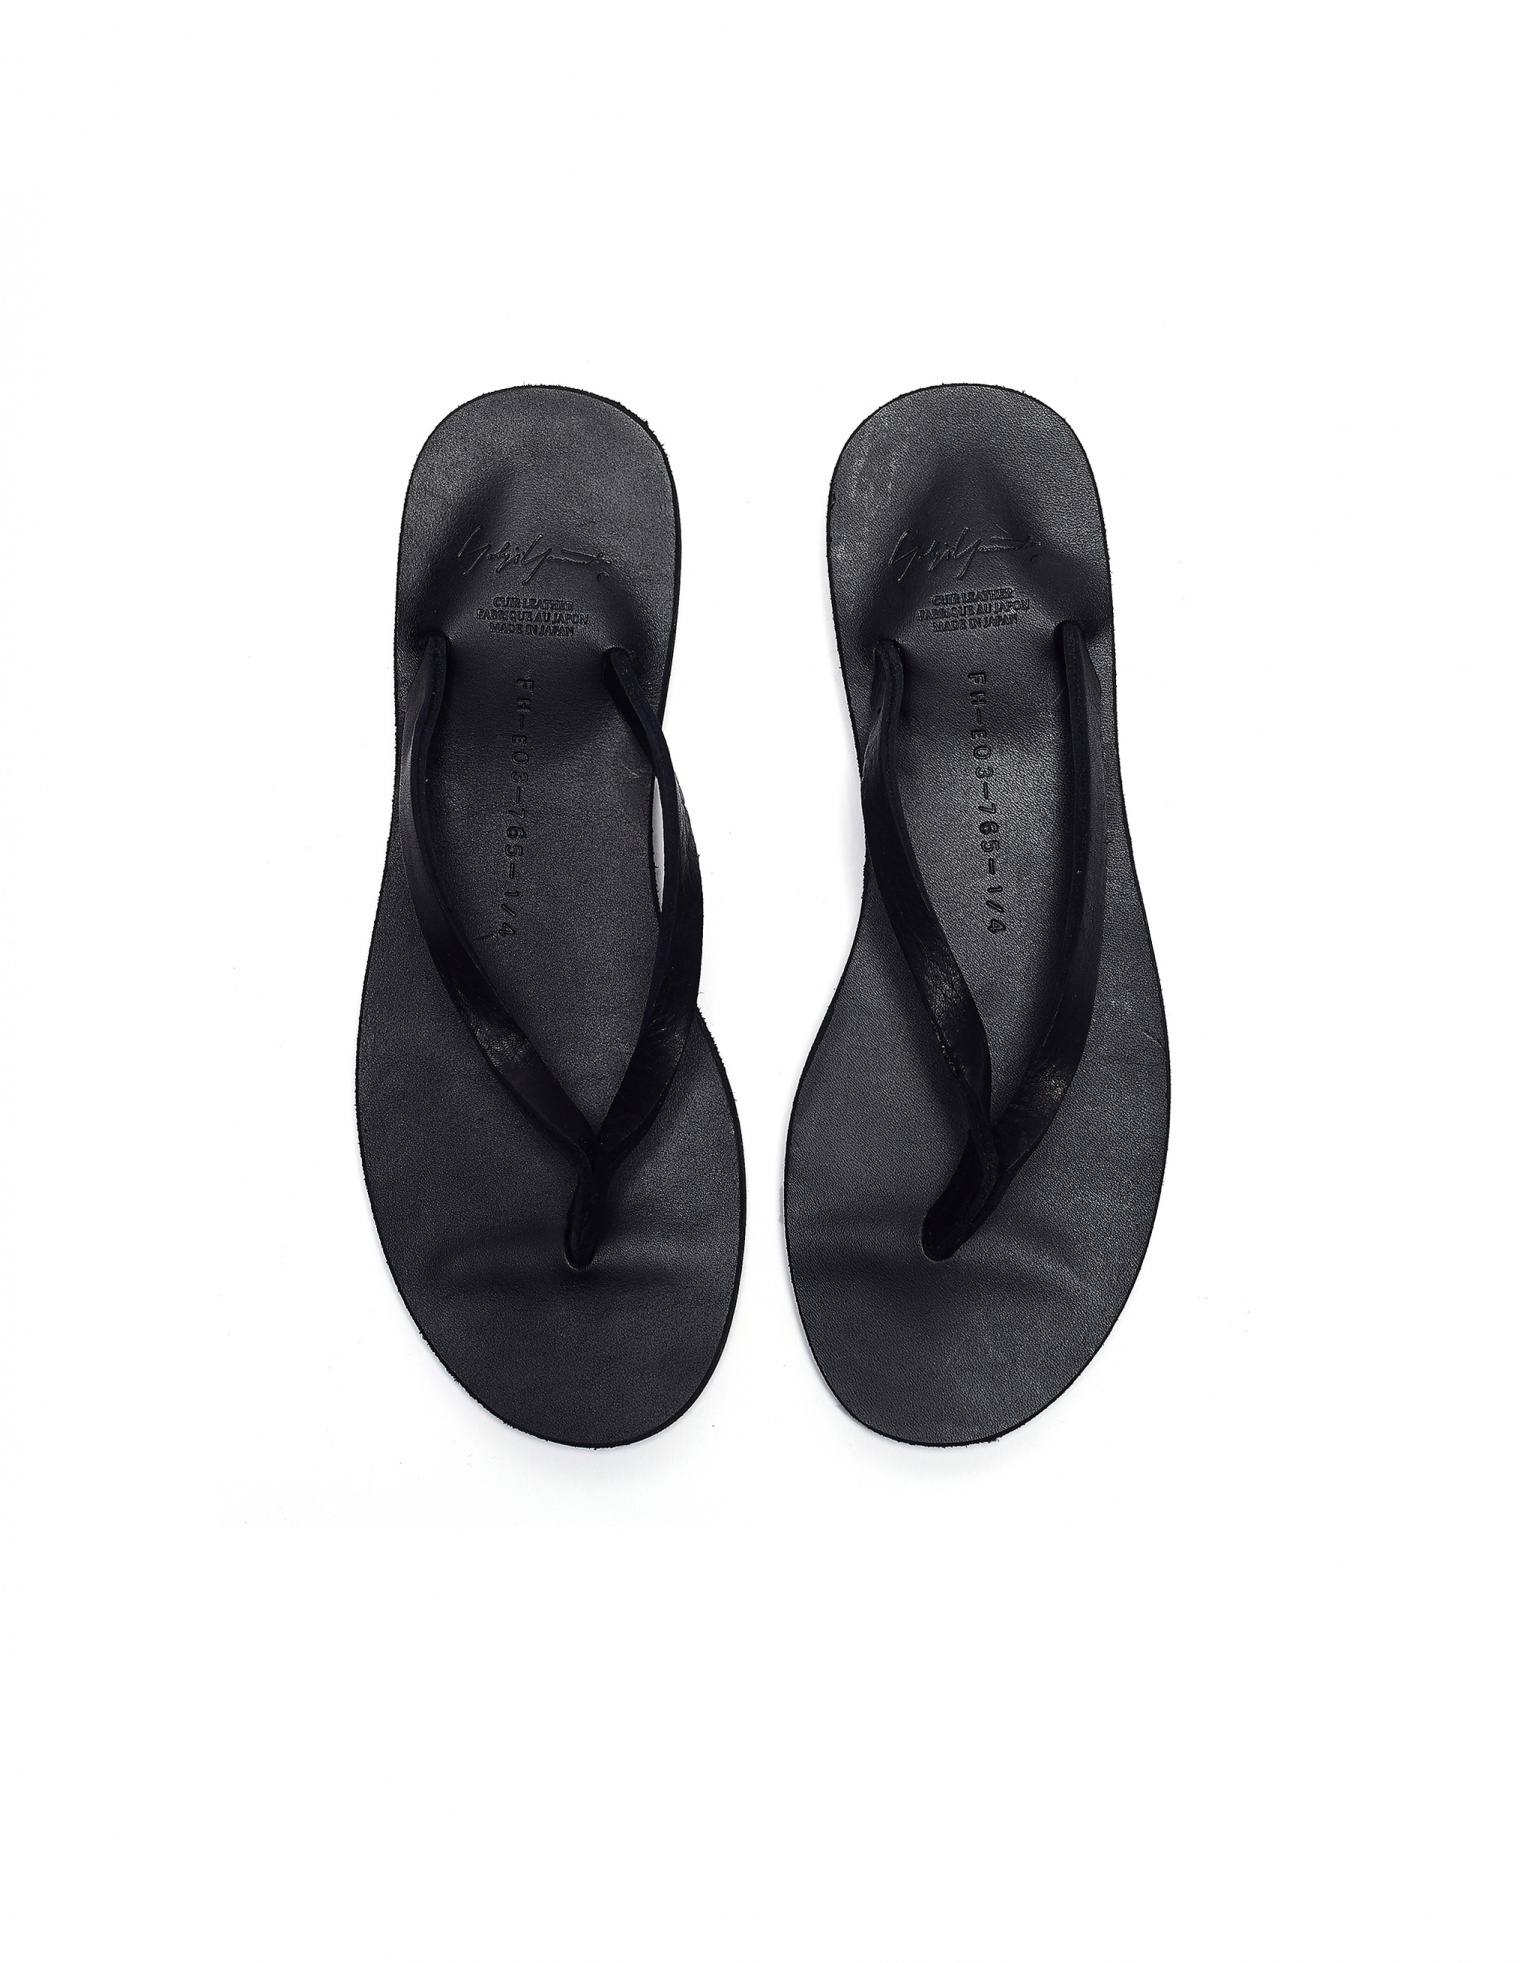 Yohji Yamamoto Black Leather Flip-Flops